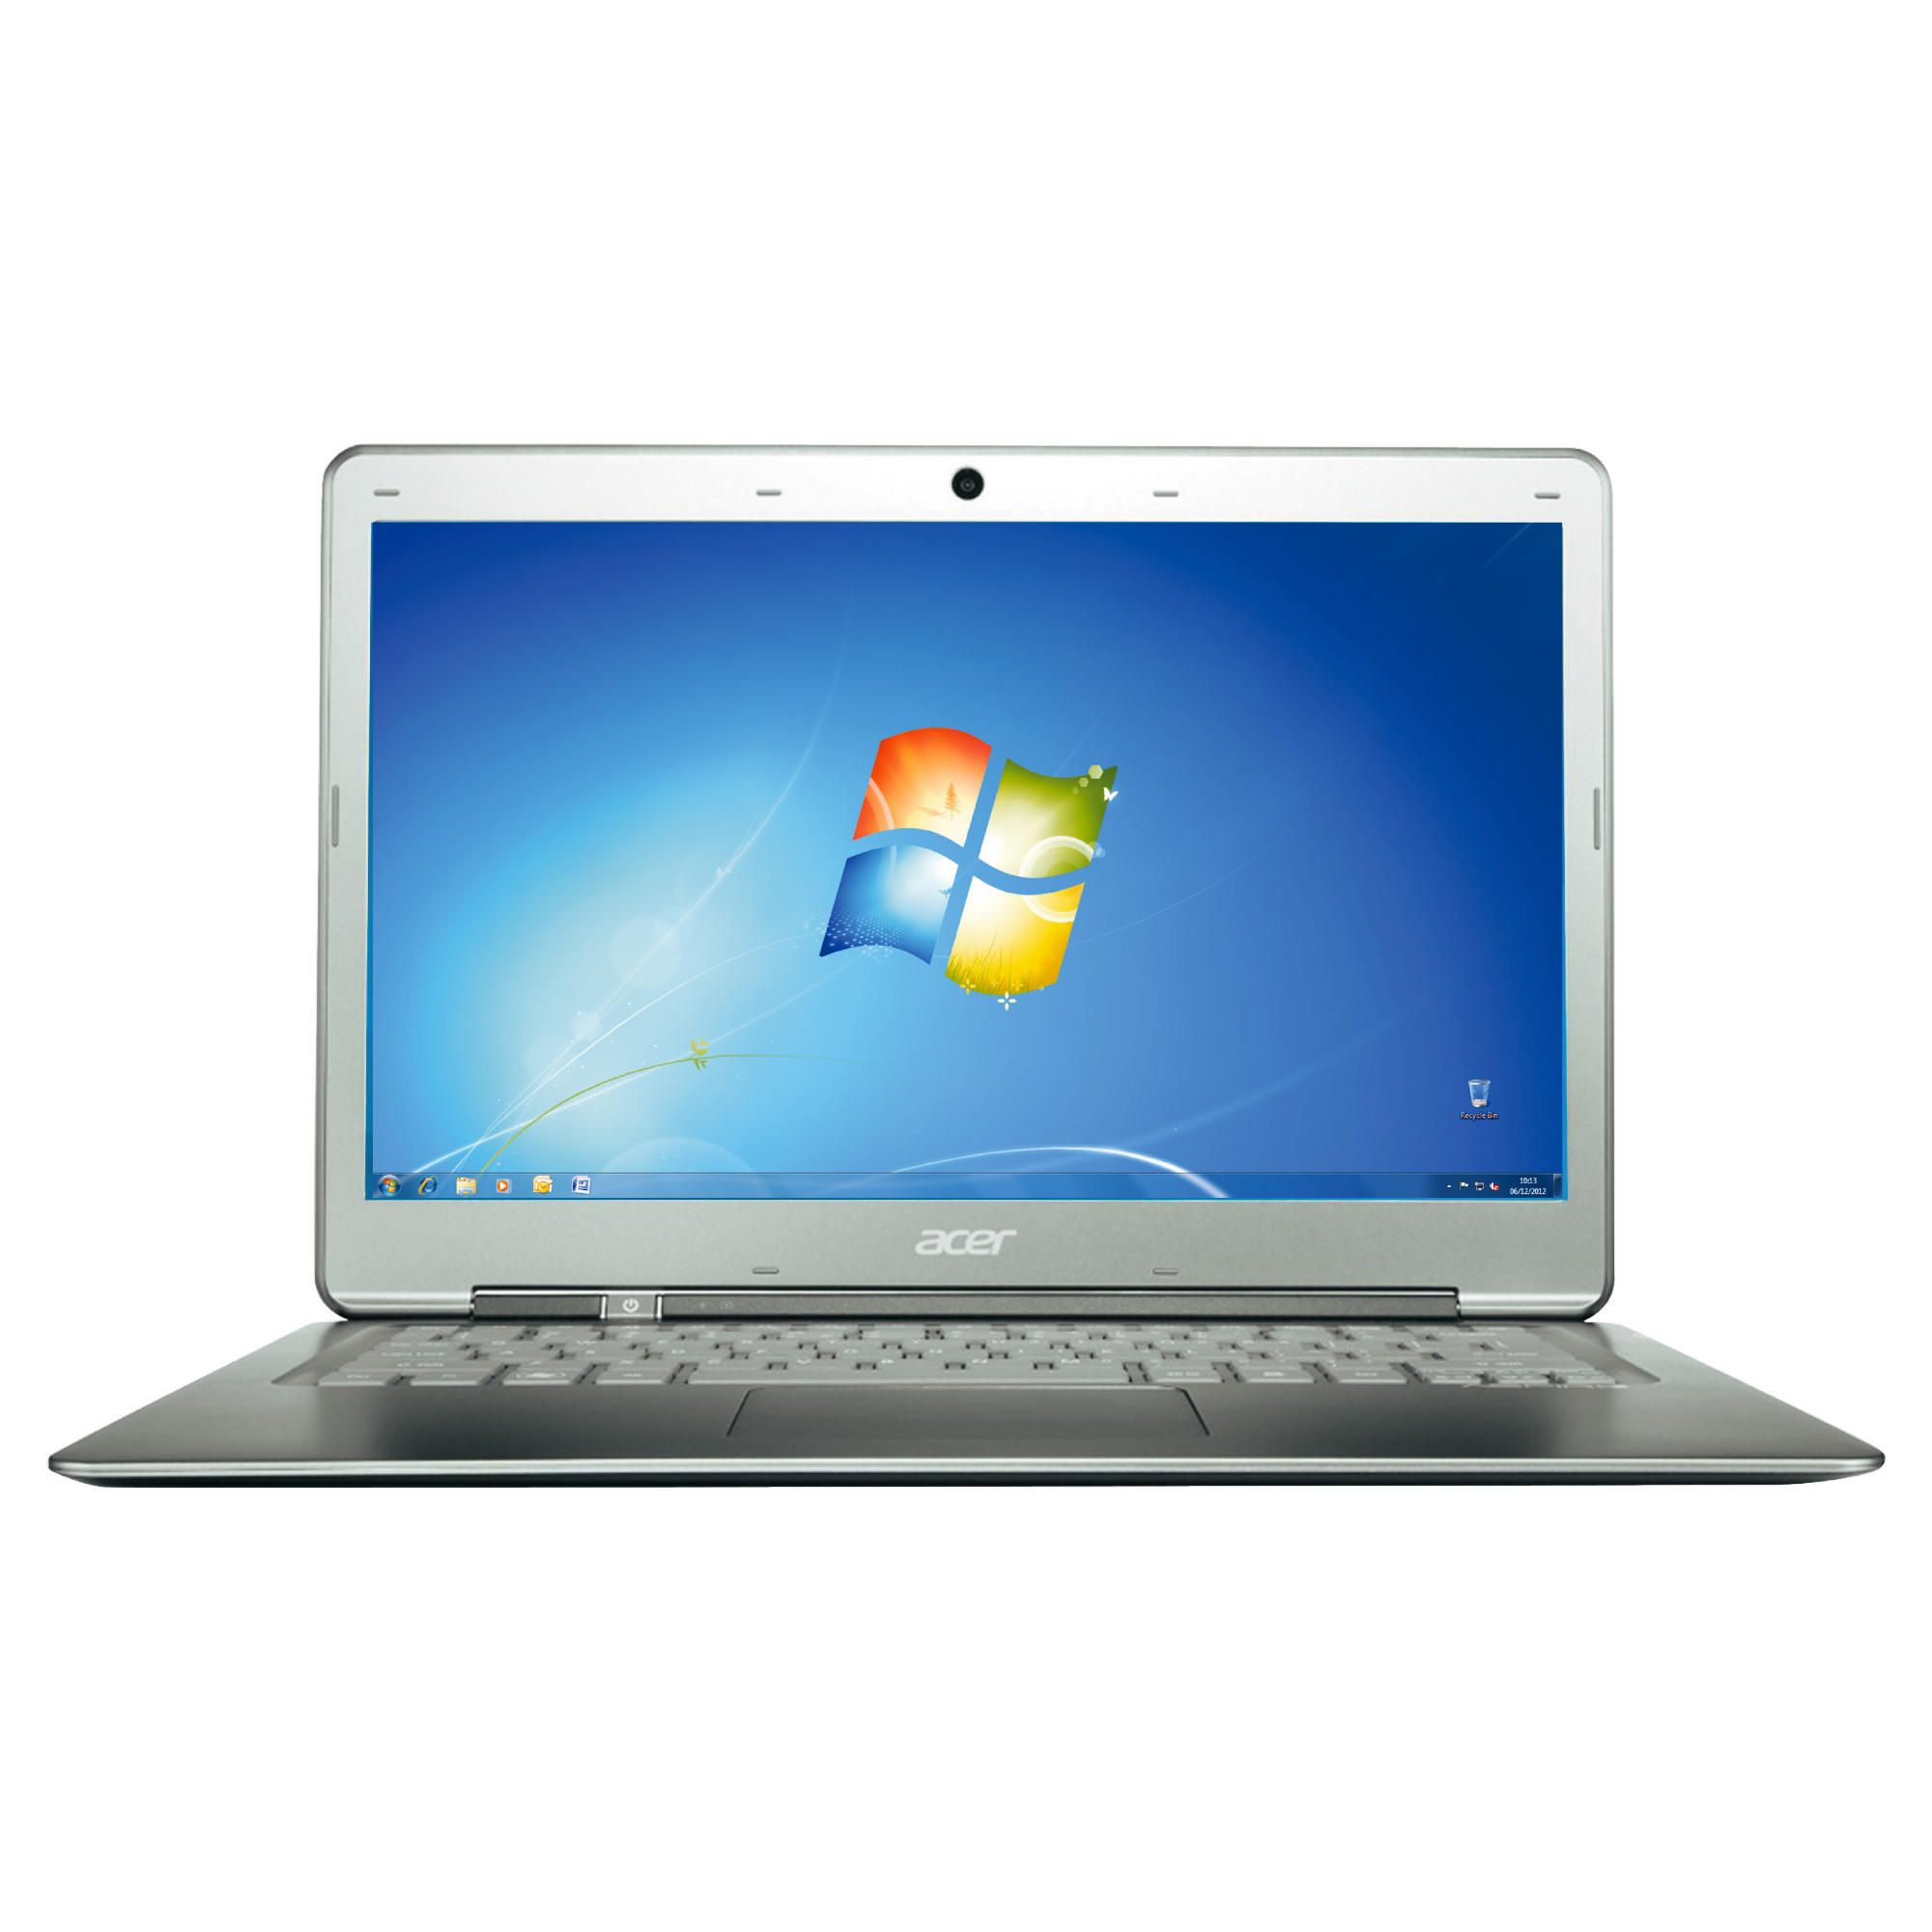 Acer Aspire S3-951 13.3-inch Ultrabook, Intel Core i7, 4GB RAM, 240GB SSD, Windows 7, Silver